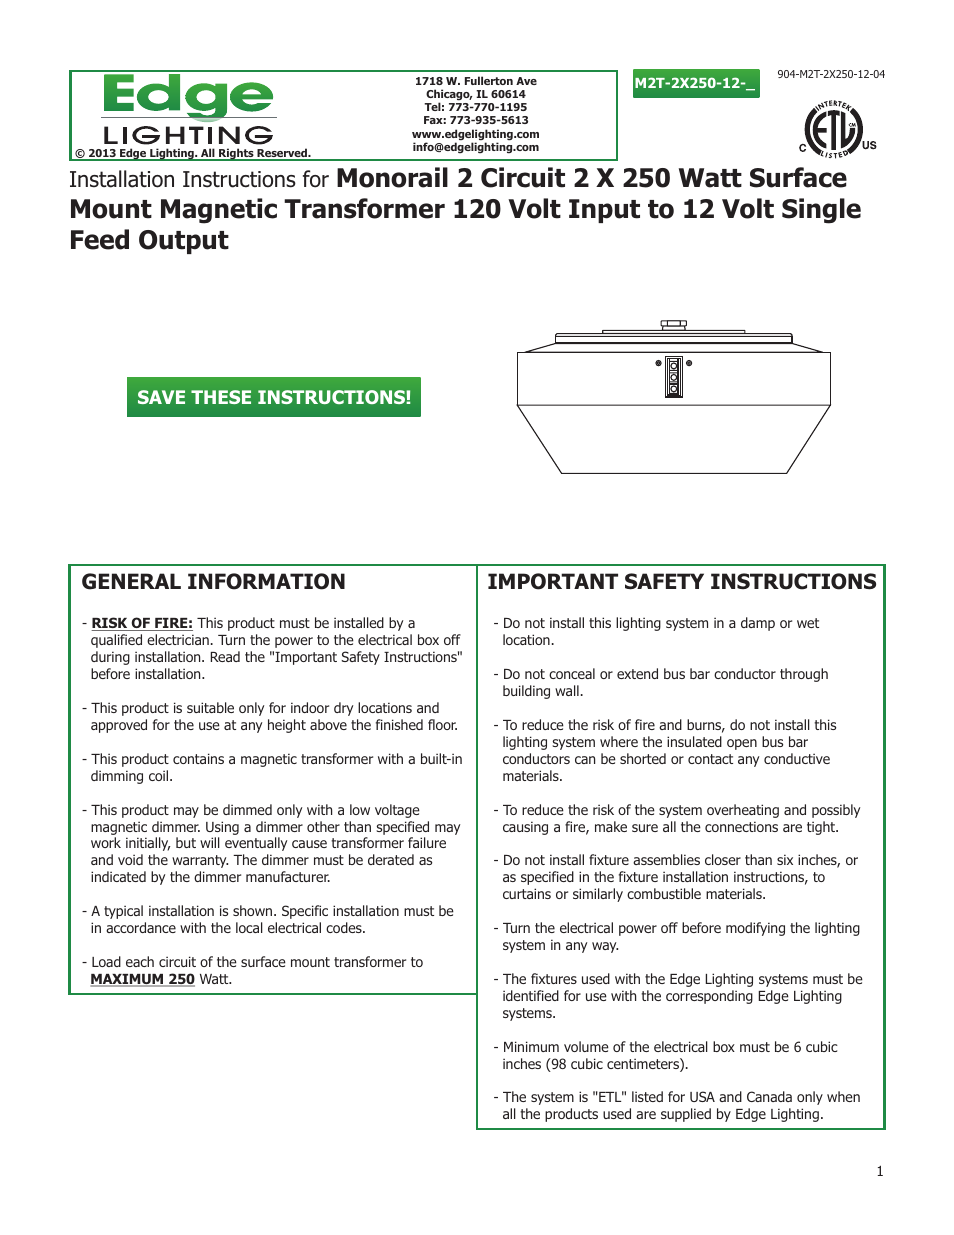 2x250W/12V Surface Mount Magnetic Transformer